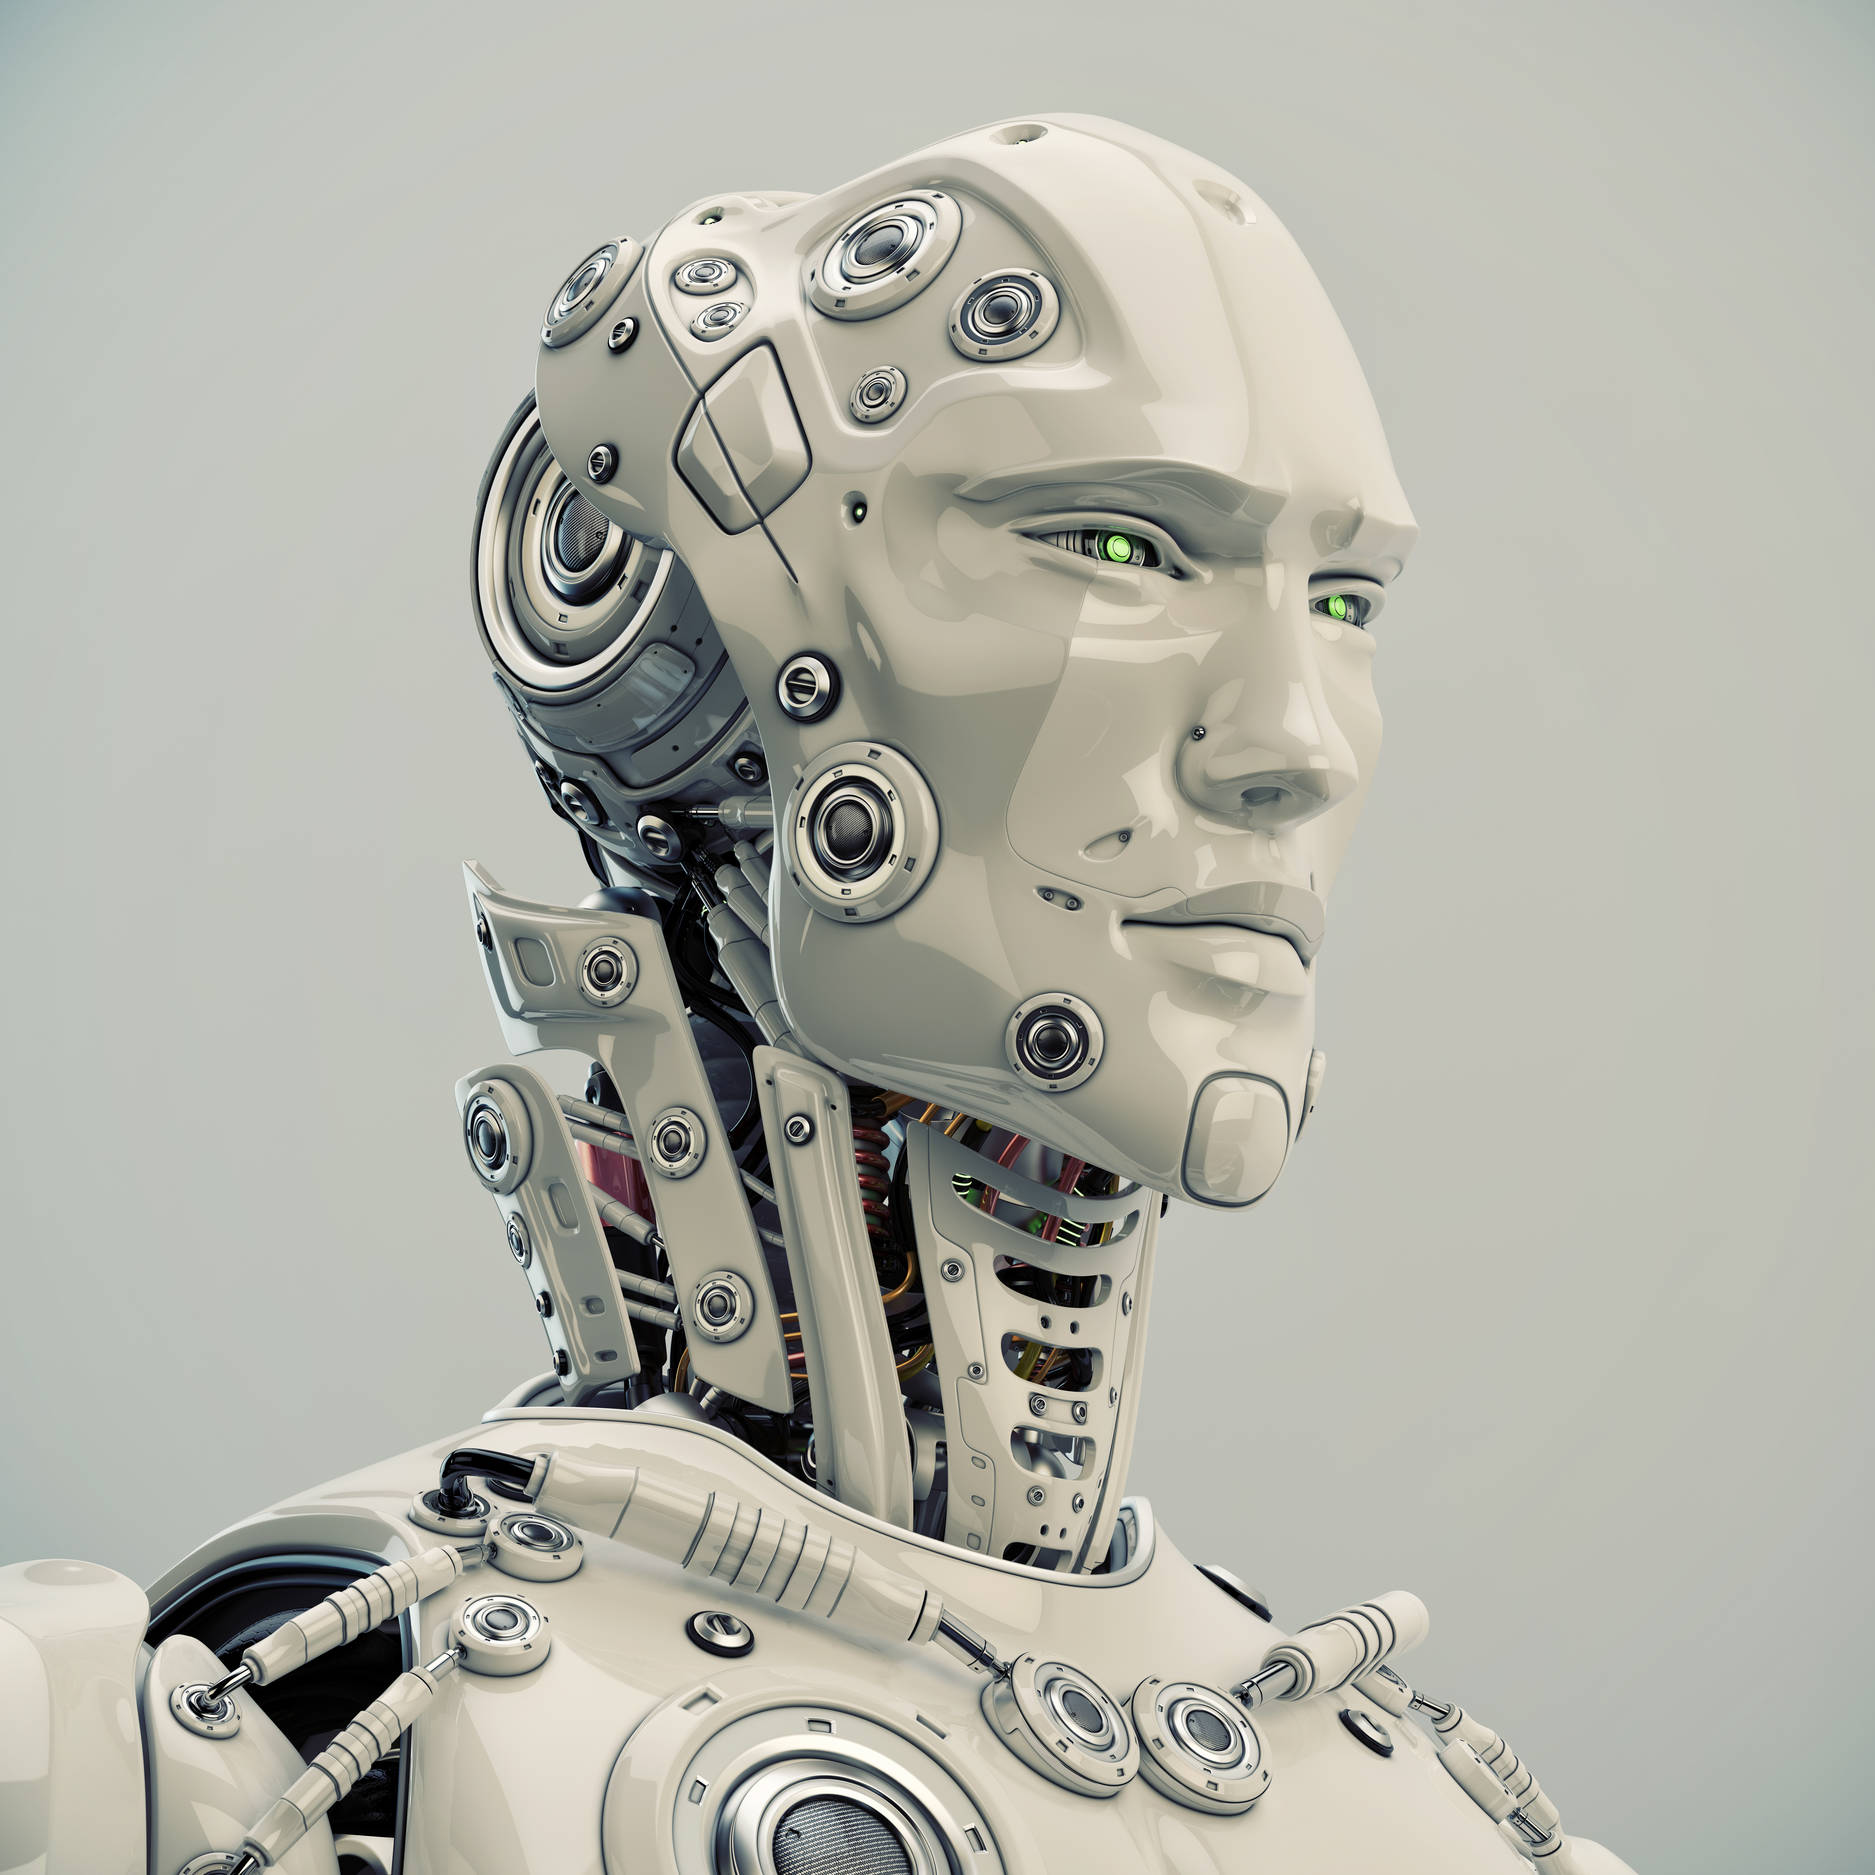 Arte робот. Киберпанк киборги, биороботы. Человека робот киборг биоробот. Голова робота. Робо.